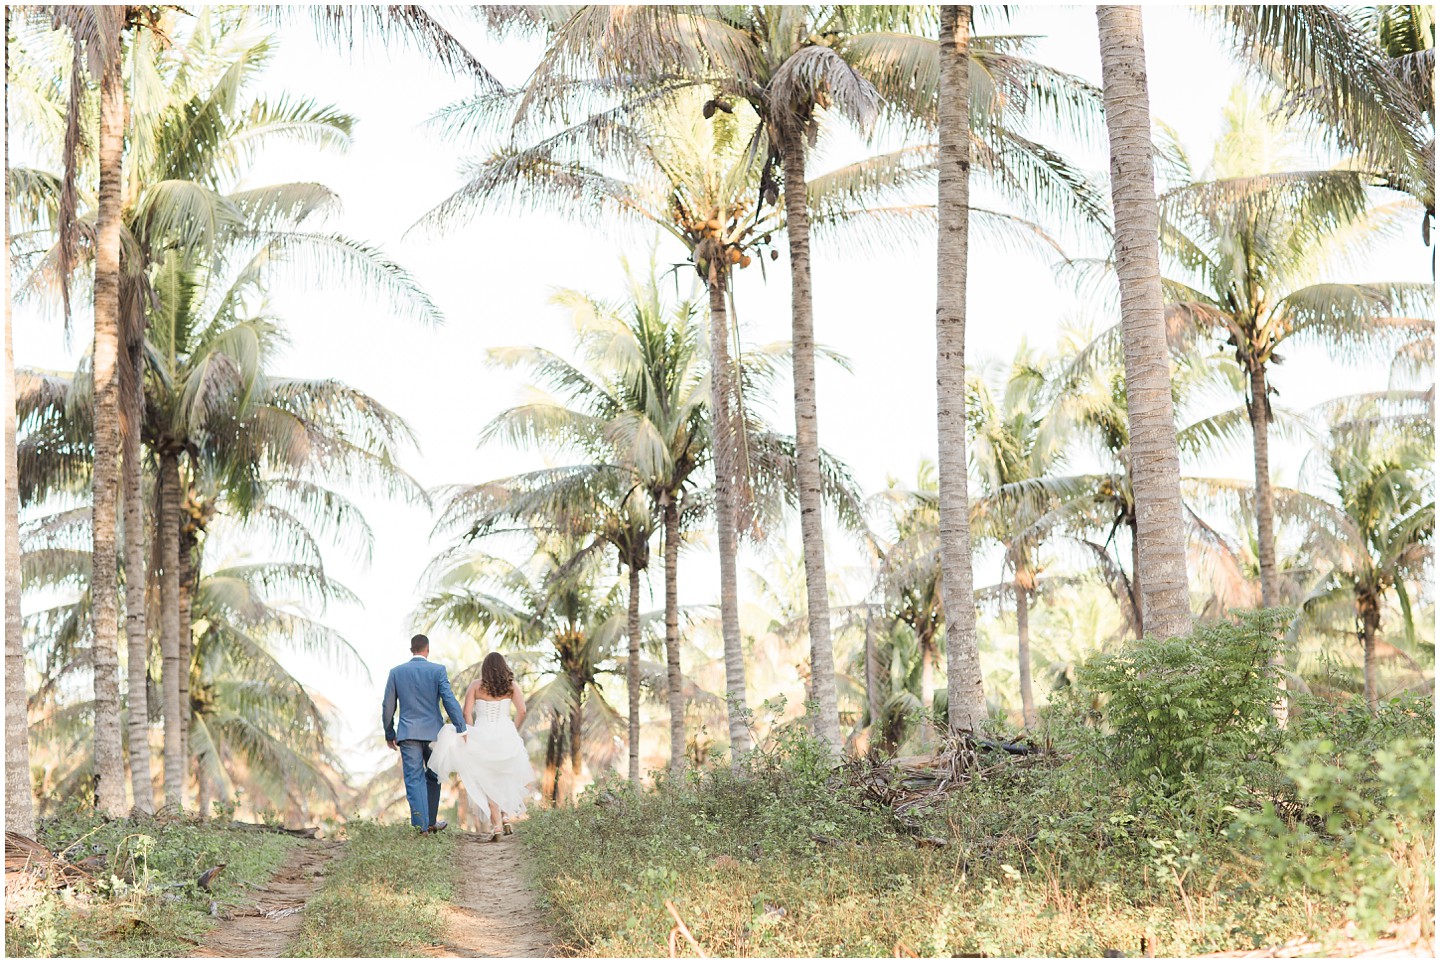 Elopement Fiji Coconut Plantation Bride & Groom Walking